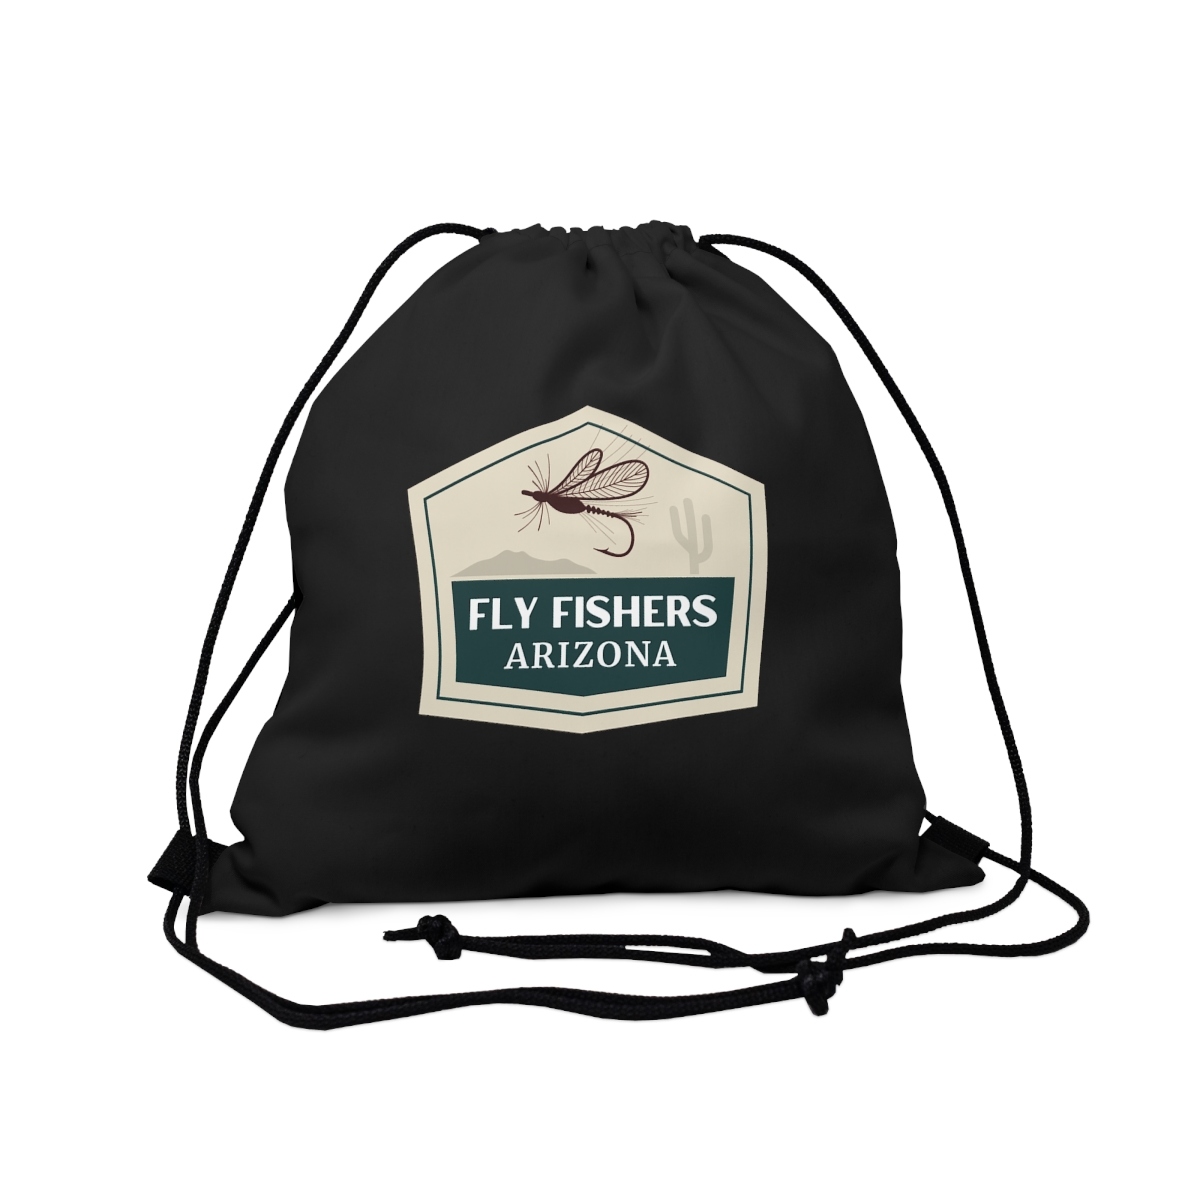 Fly Fishers Arizona Outdoor Drawstring Bag product thumbnail image